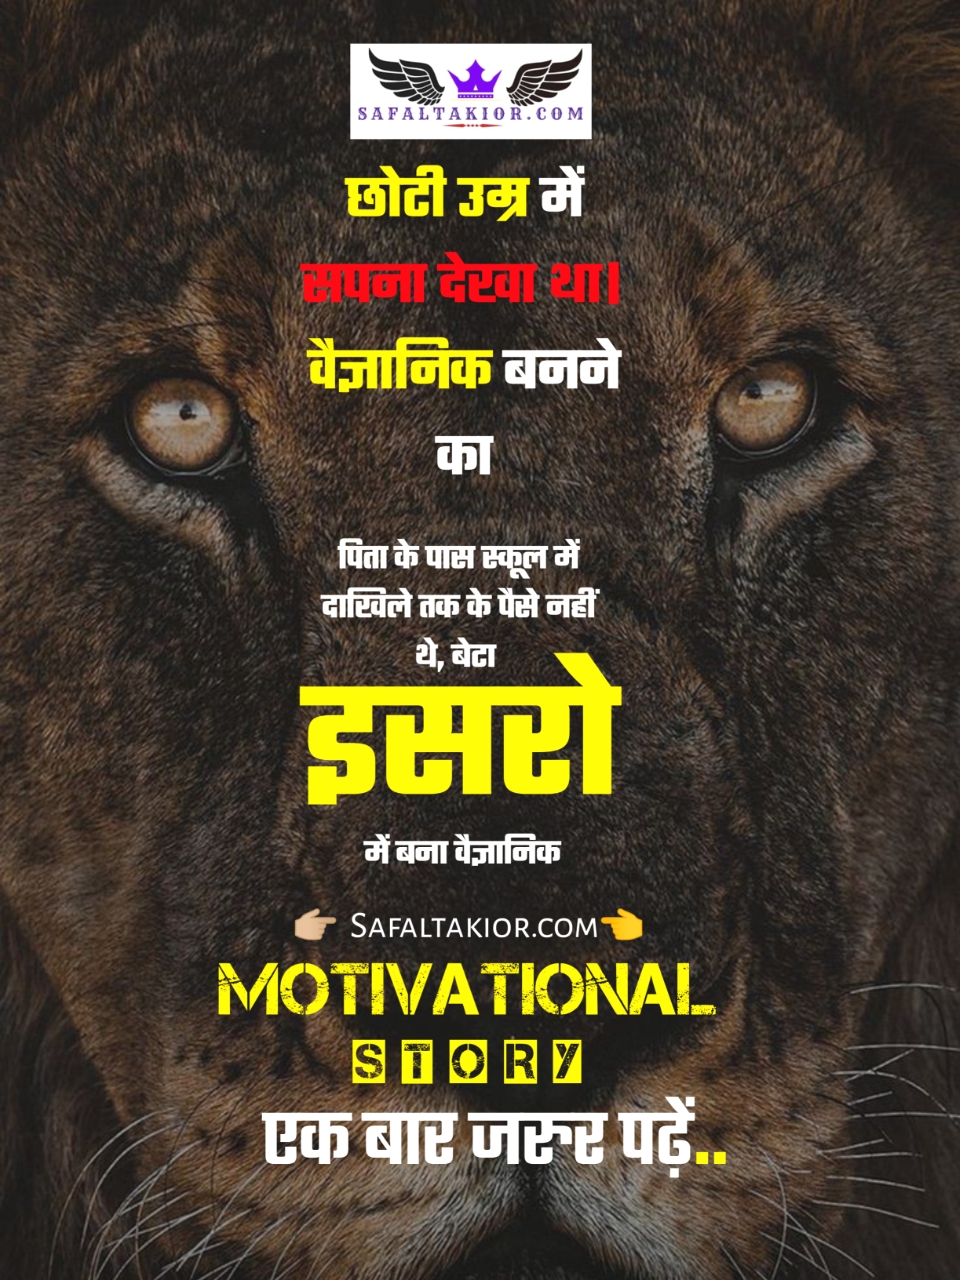 Motivation &Inspiration story hindi विद्यार्थी के लिए प्रेरणादायक कहानी मोटिवेशन स्टोरी